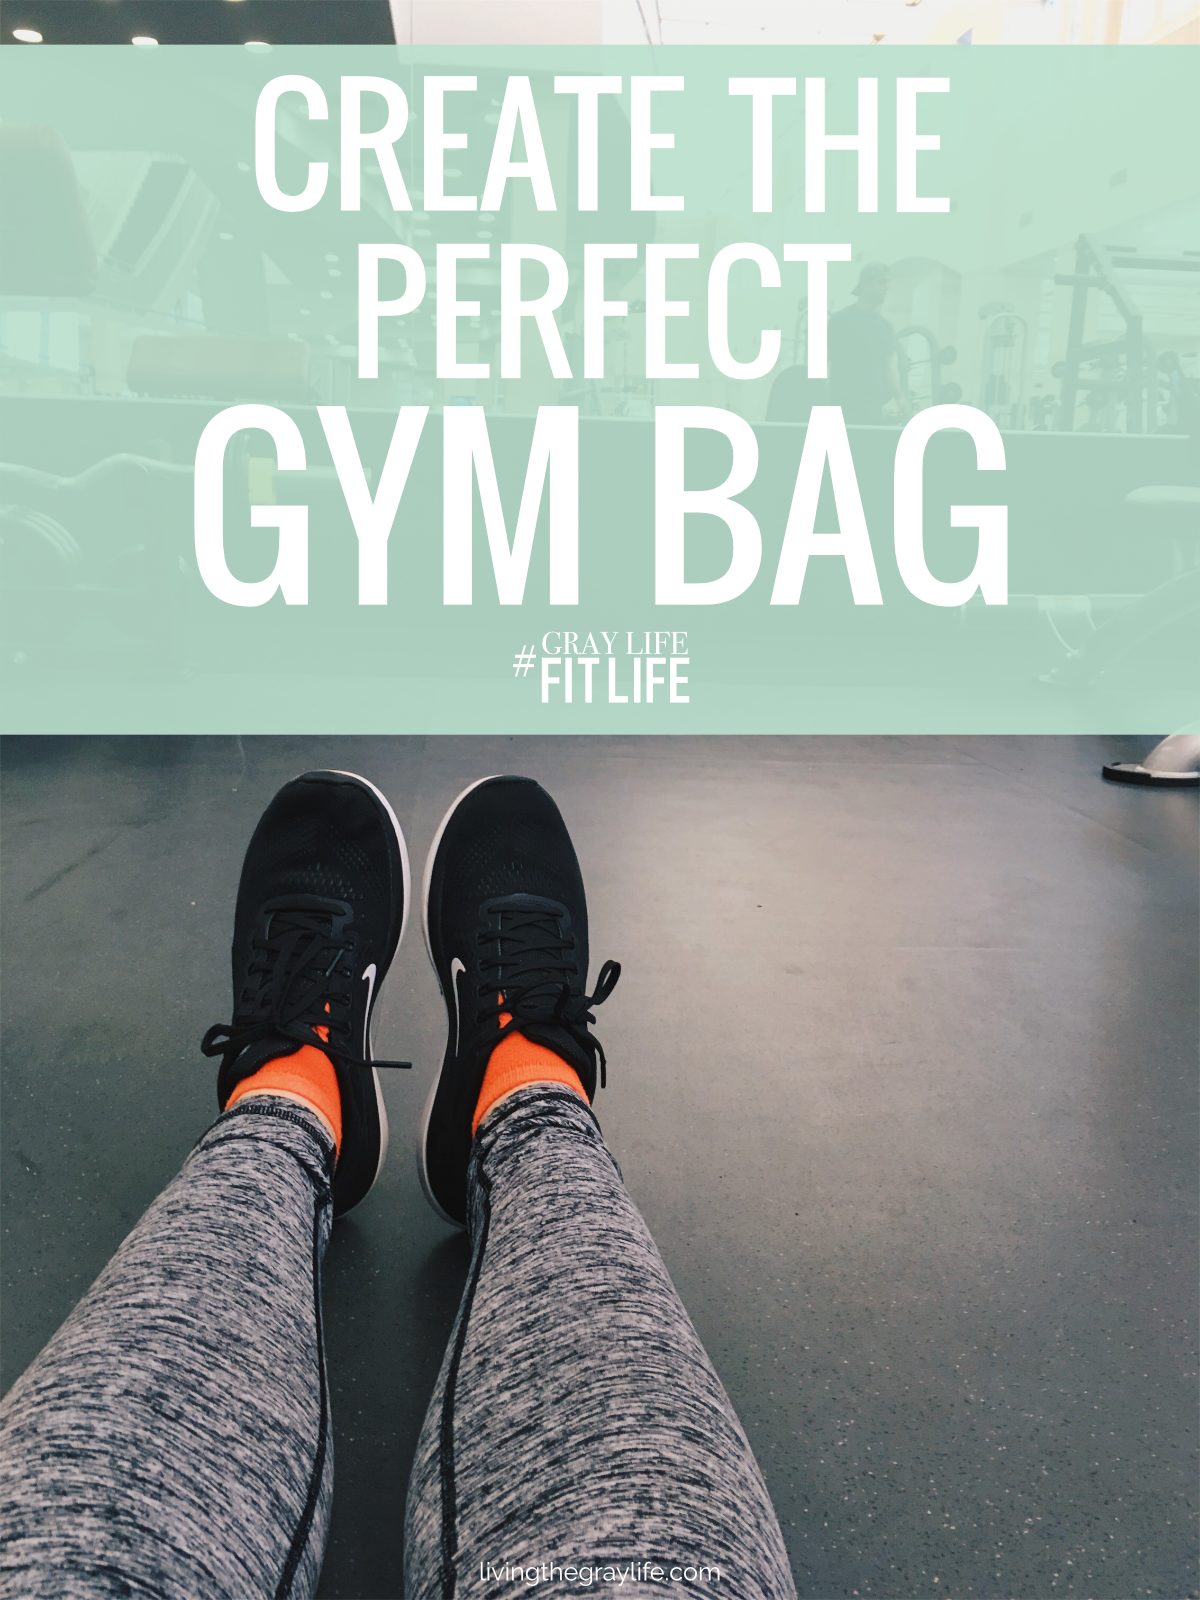 Creating the Perfect Gym Bag